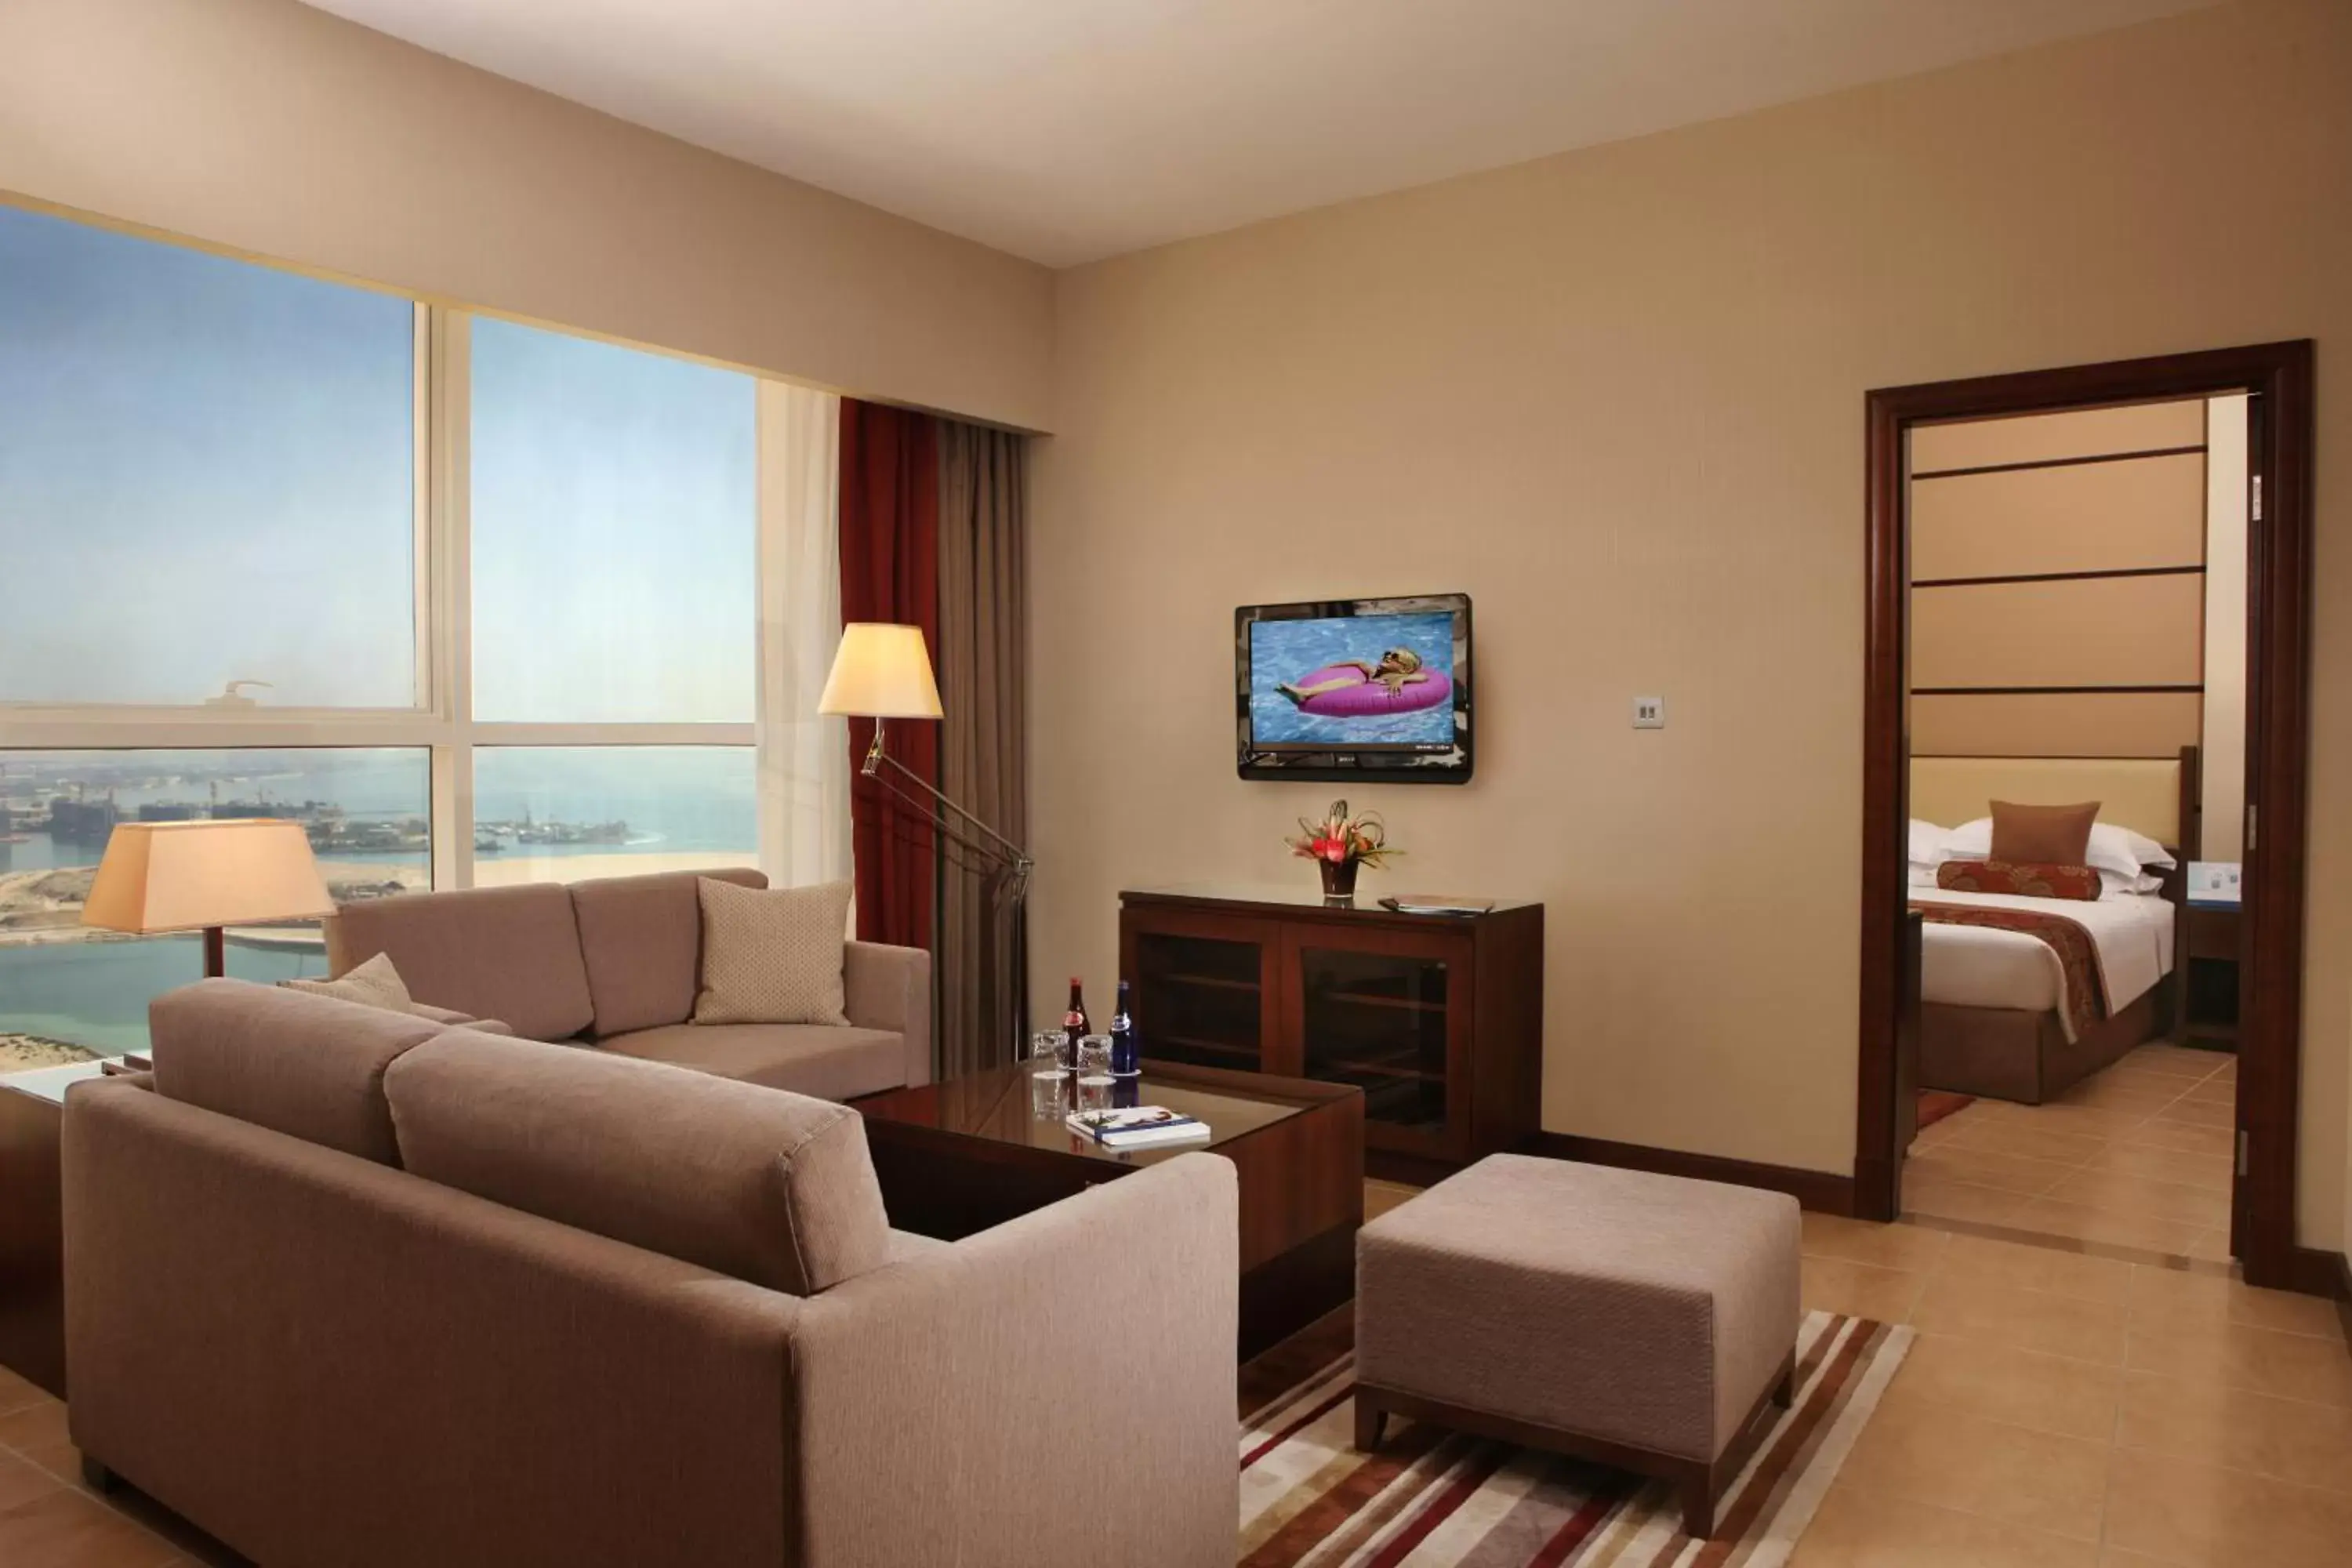 TV and multimedia, Seating Area in Khalidiya Palace Rayhaan by Rotana, Abu Dhabi